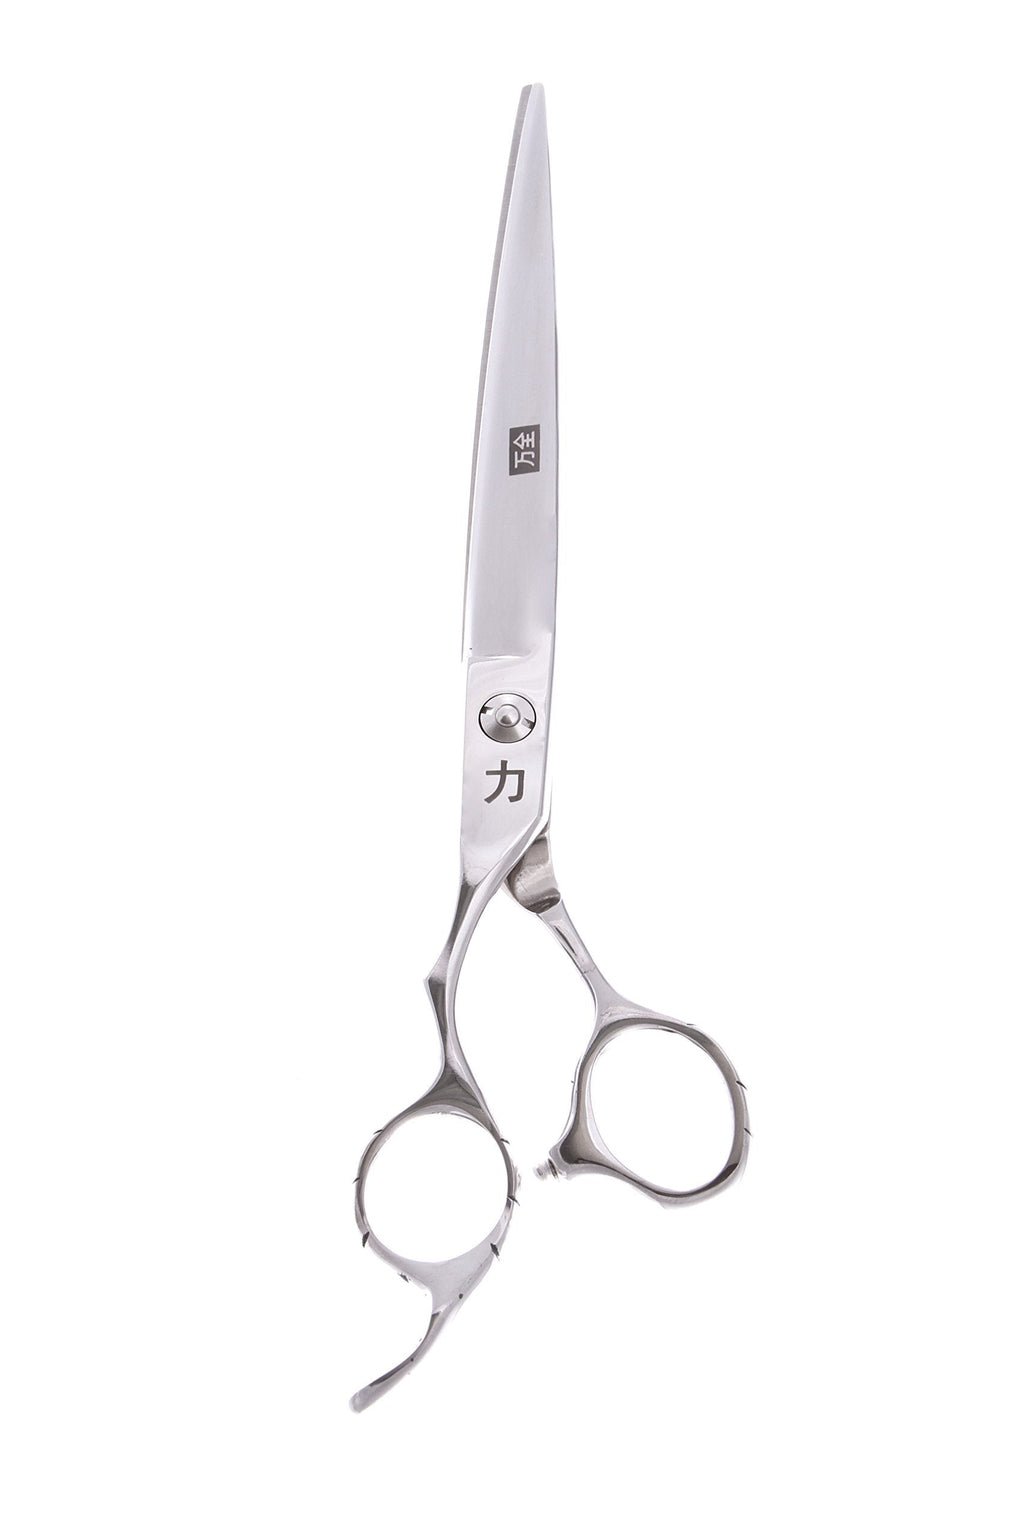 [Australia] - ShearsDirect True Left Handed Professional Grooming Shear Scissors with an Ergonomic Handle Design, 8" 